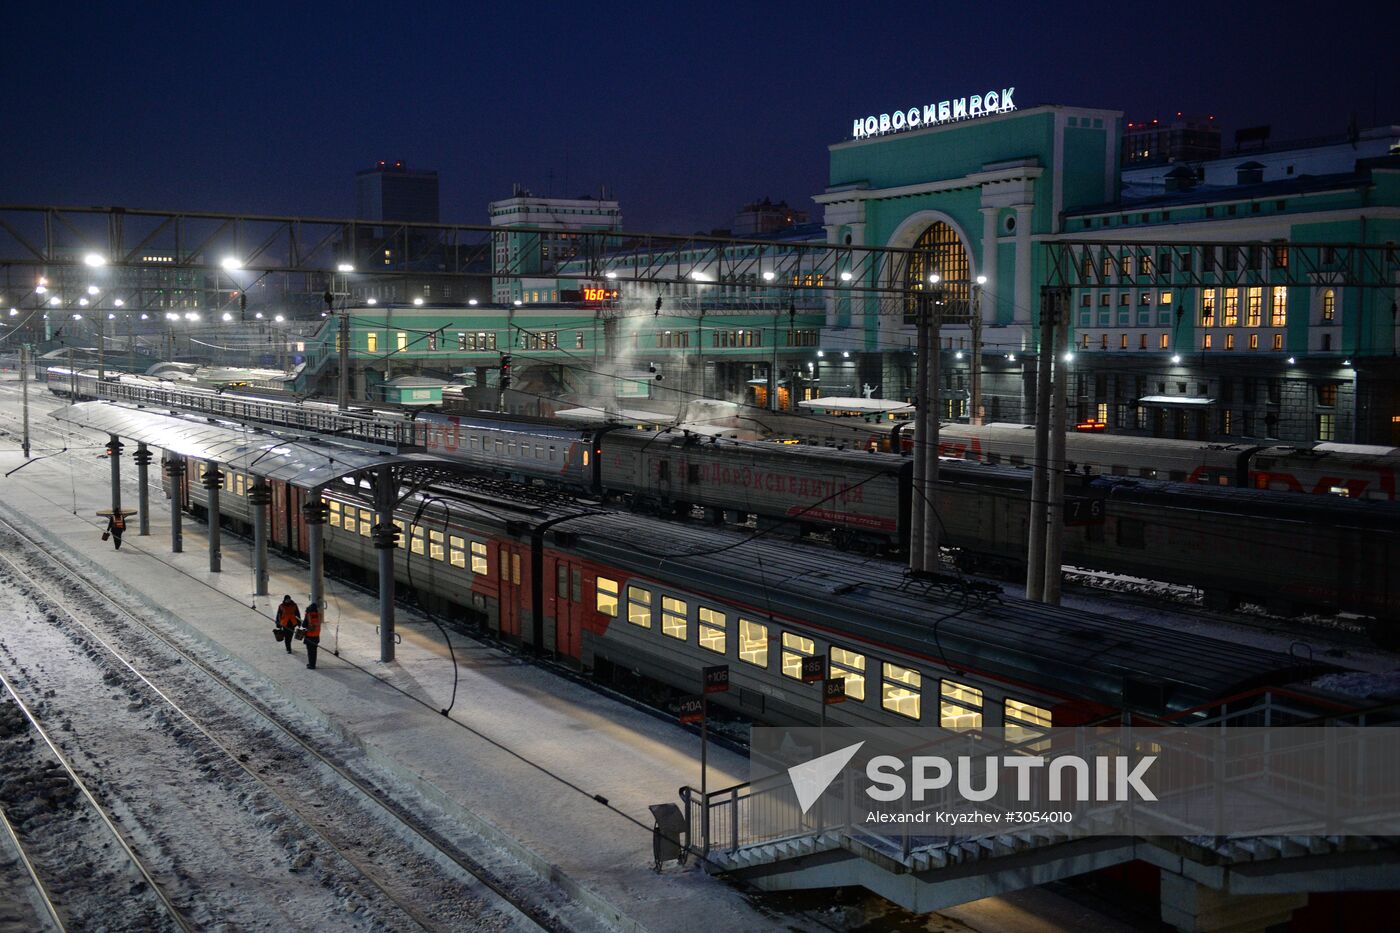 The 100th anniversary of the Trans-Siberian Railway. Western Siberian Railway